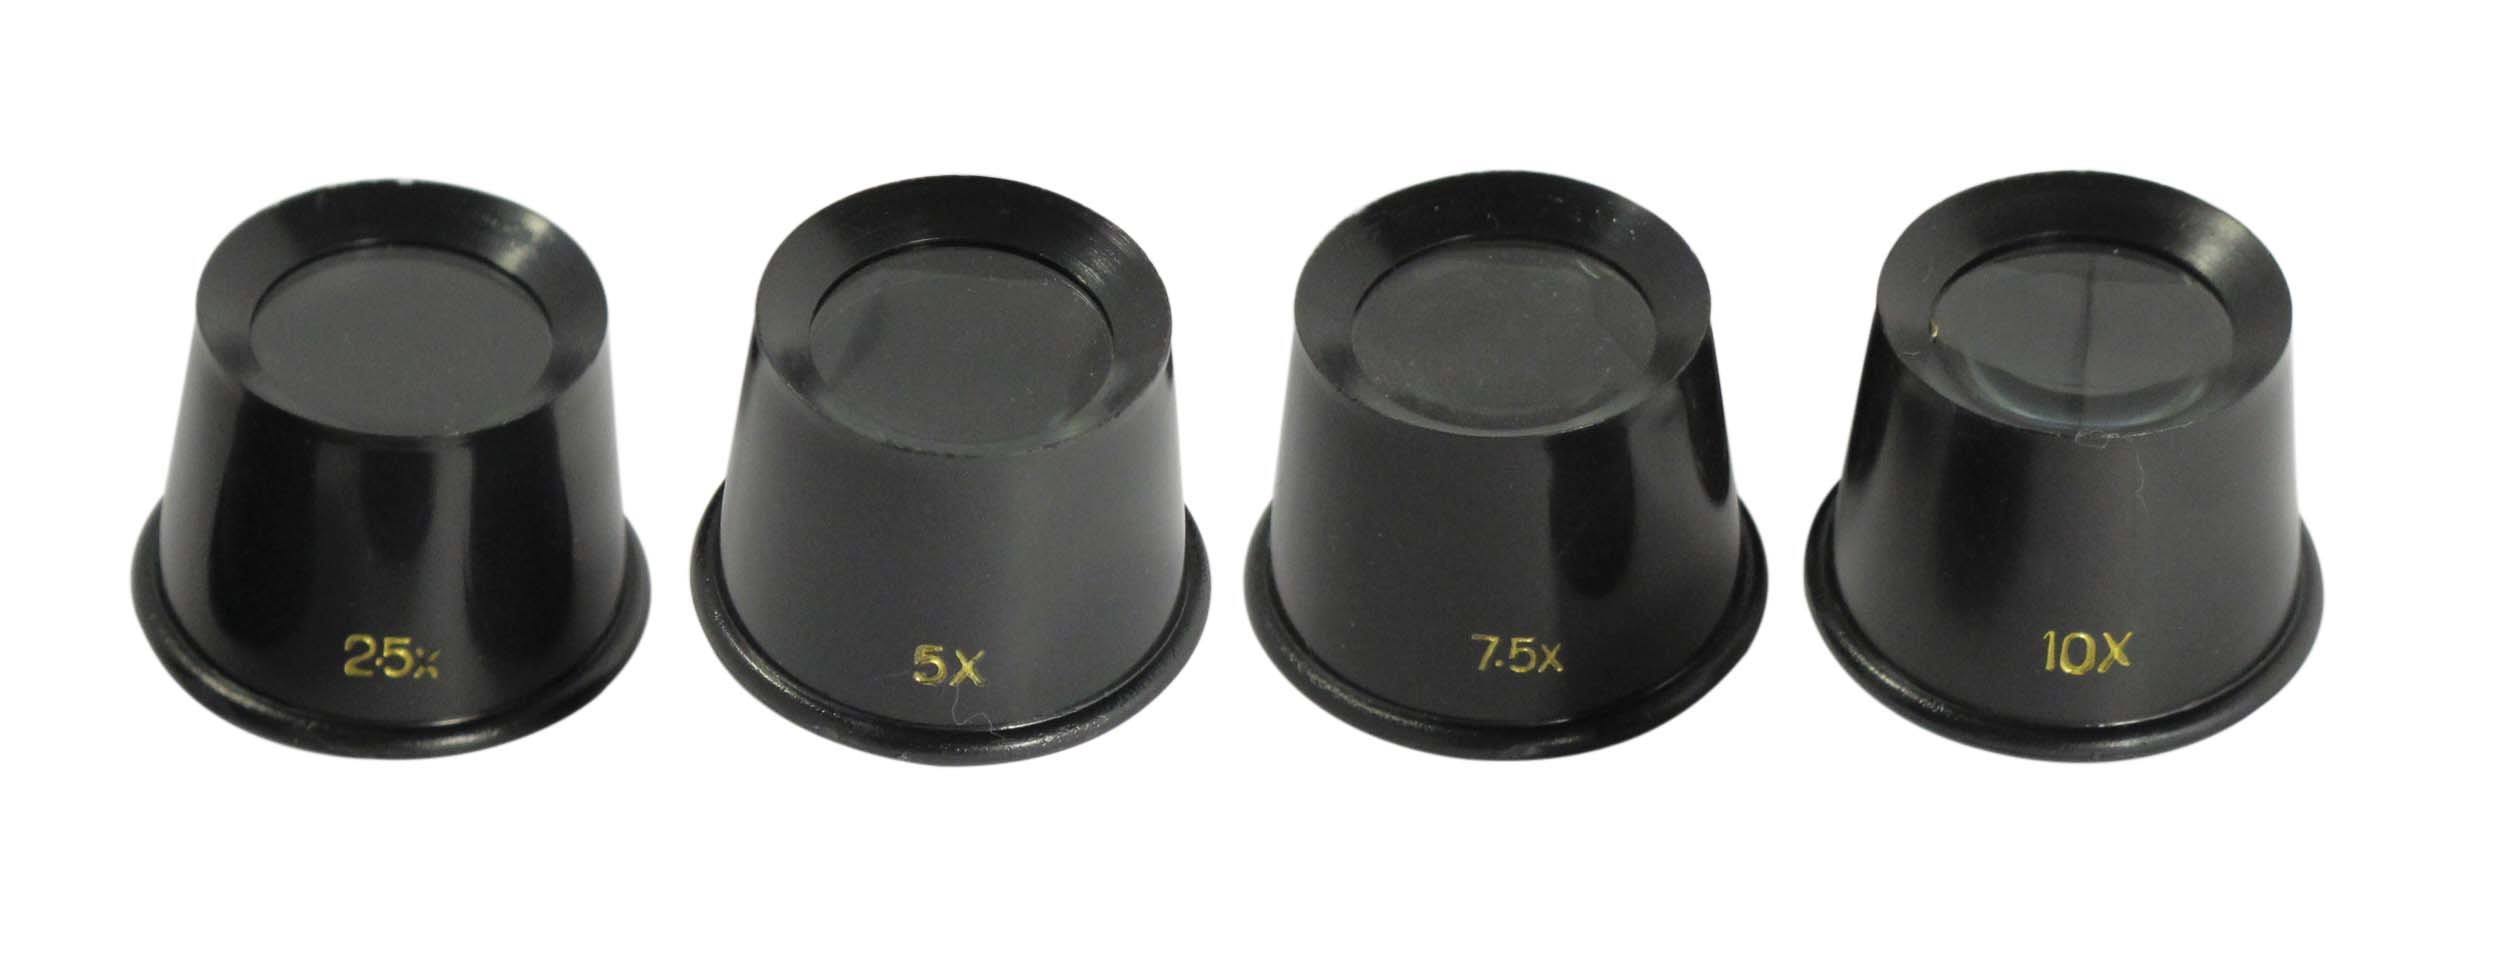 SE MI120-4 4 Pc Plastic Eye Loupe in Plastic Box 10X, 7.5X, 5X, 2.5X